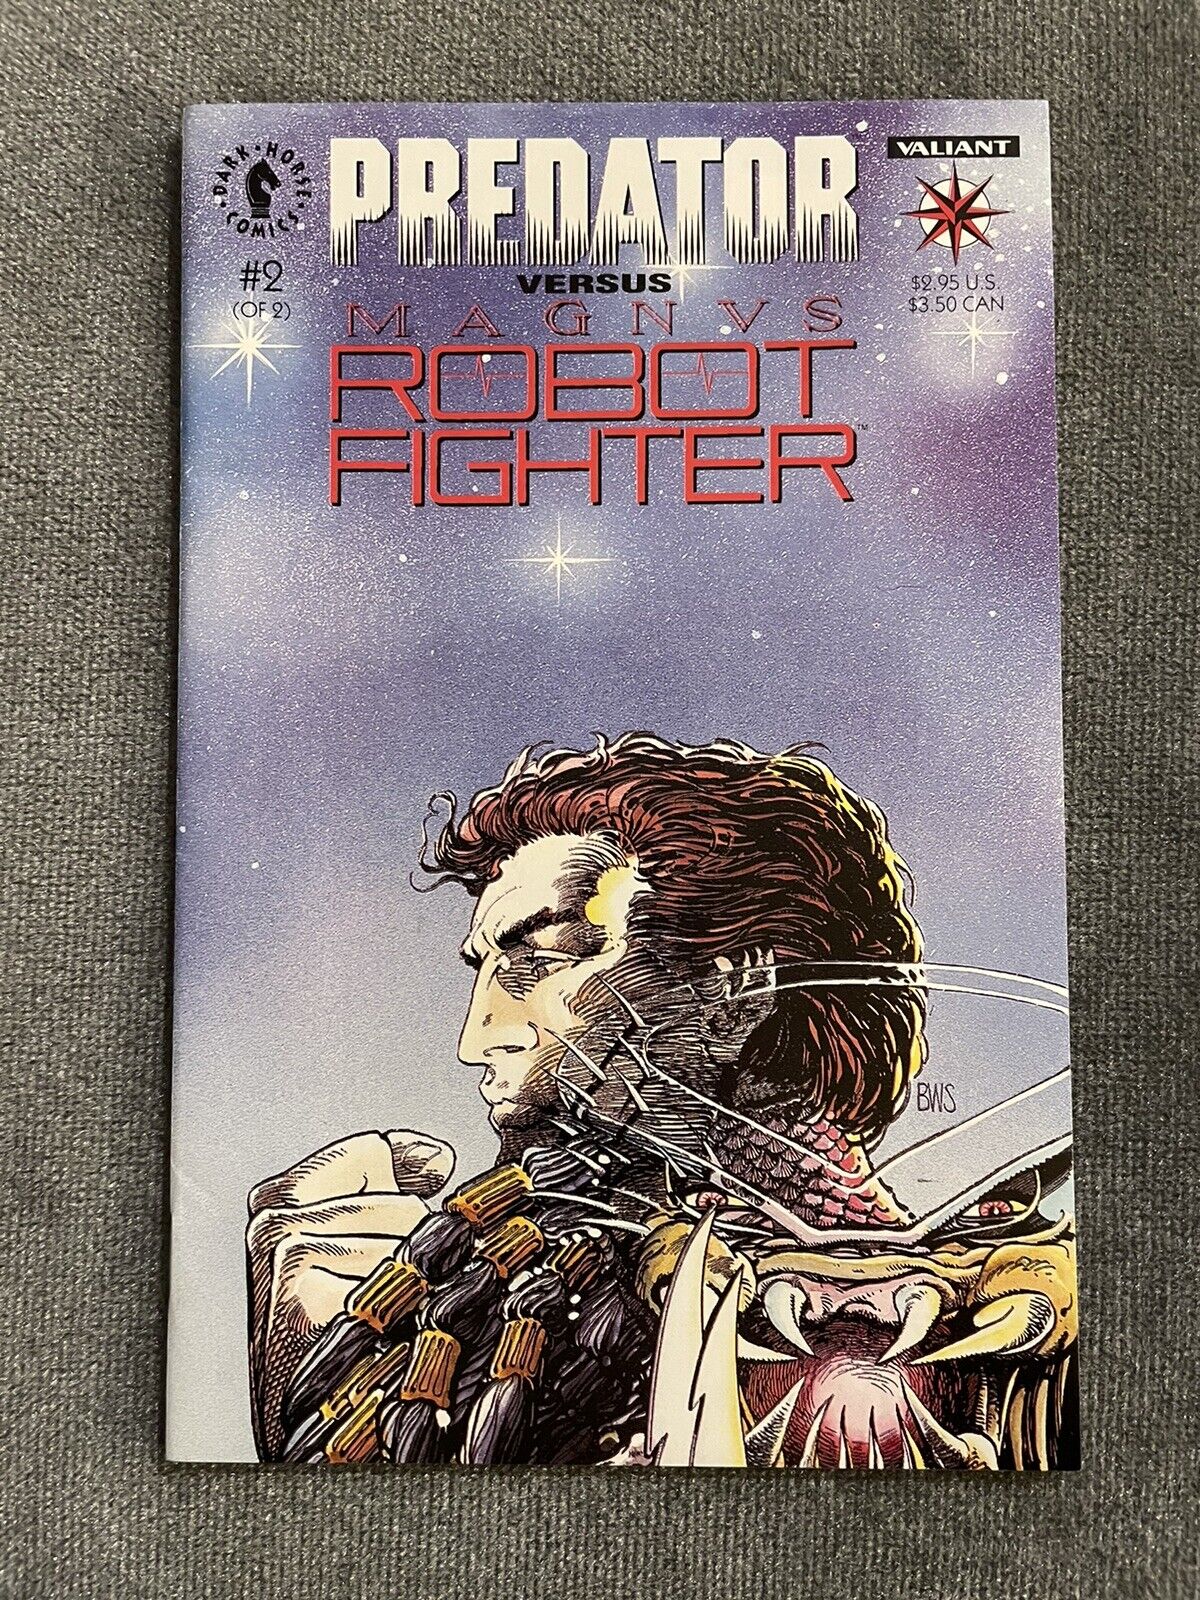 1992 Dark Horse Comics Valiant Predator Versus Magnvs Robot Fighter Issues 1&2